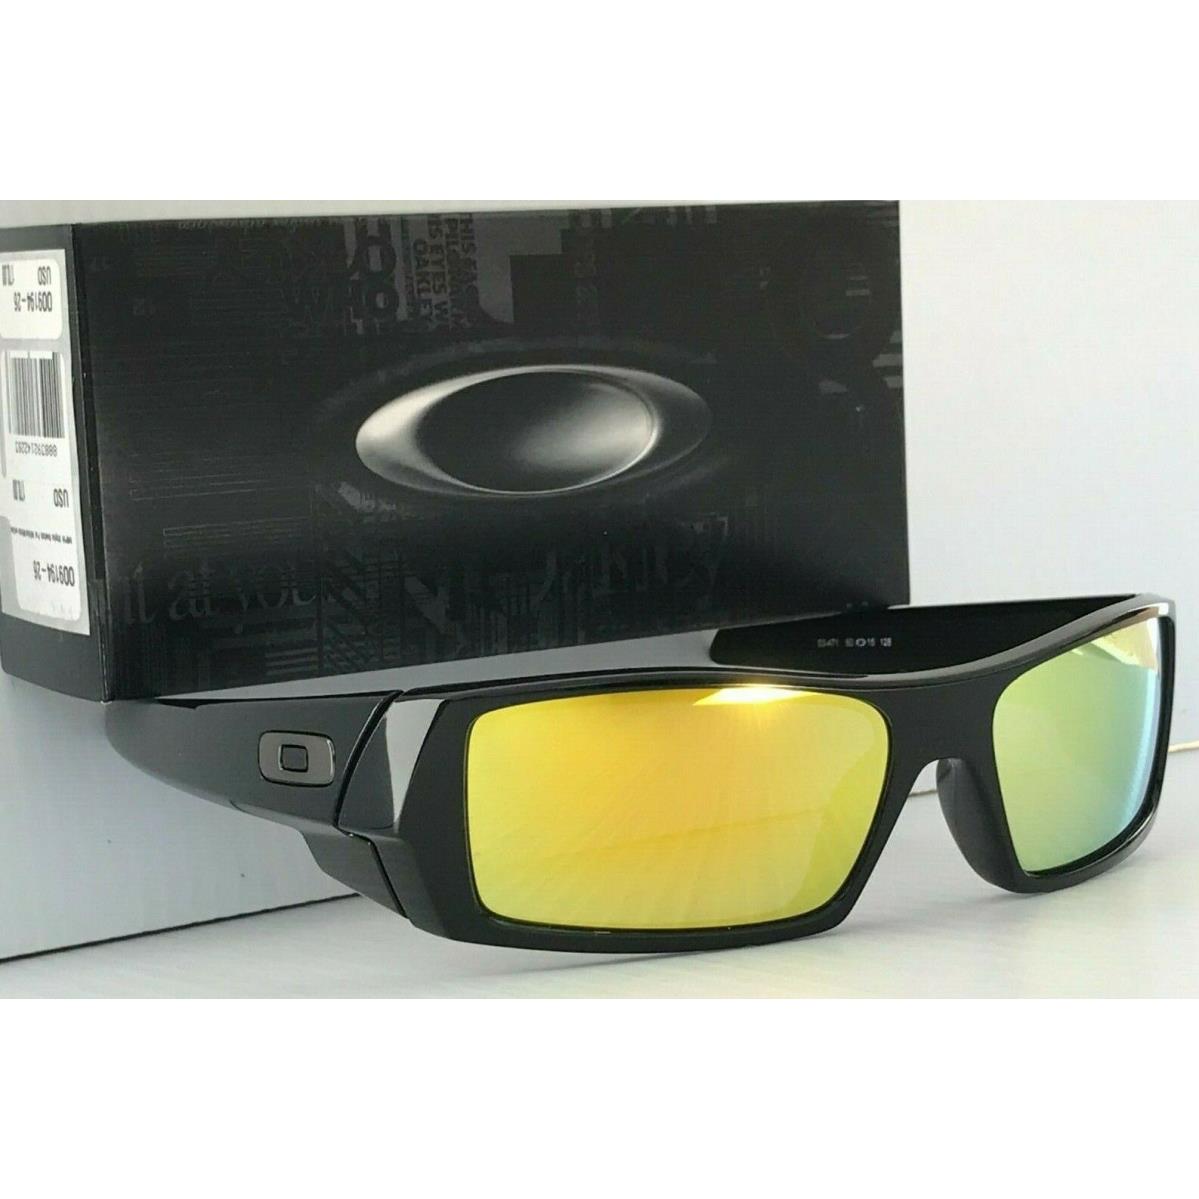 Oakley sunglasses Gascan - Black Frame, Gold Lens 6